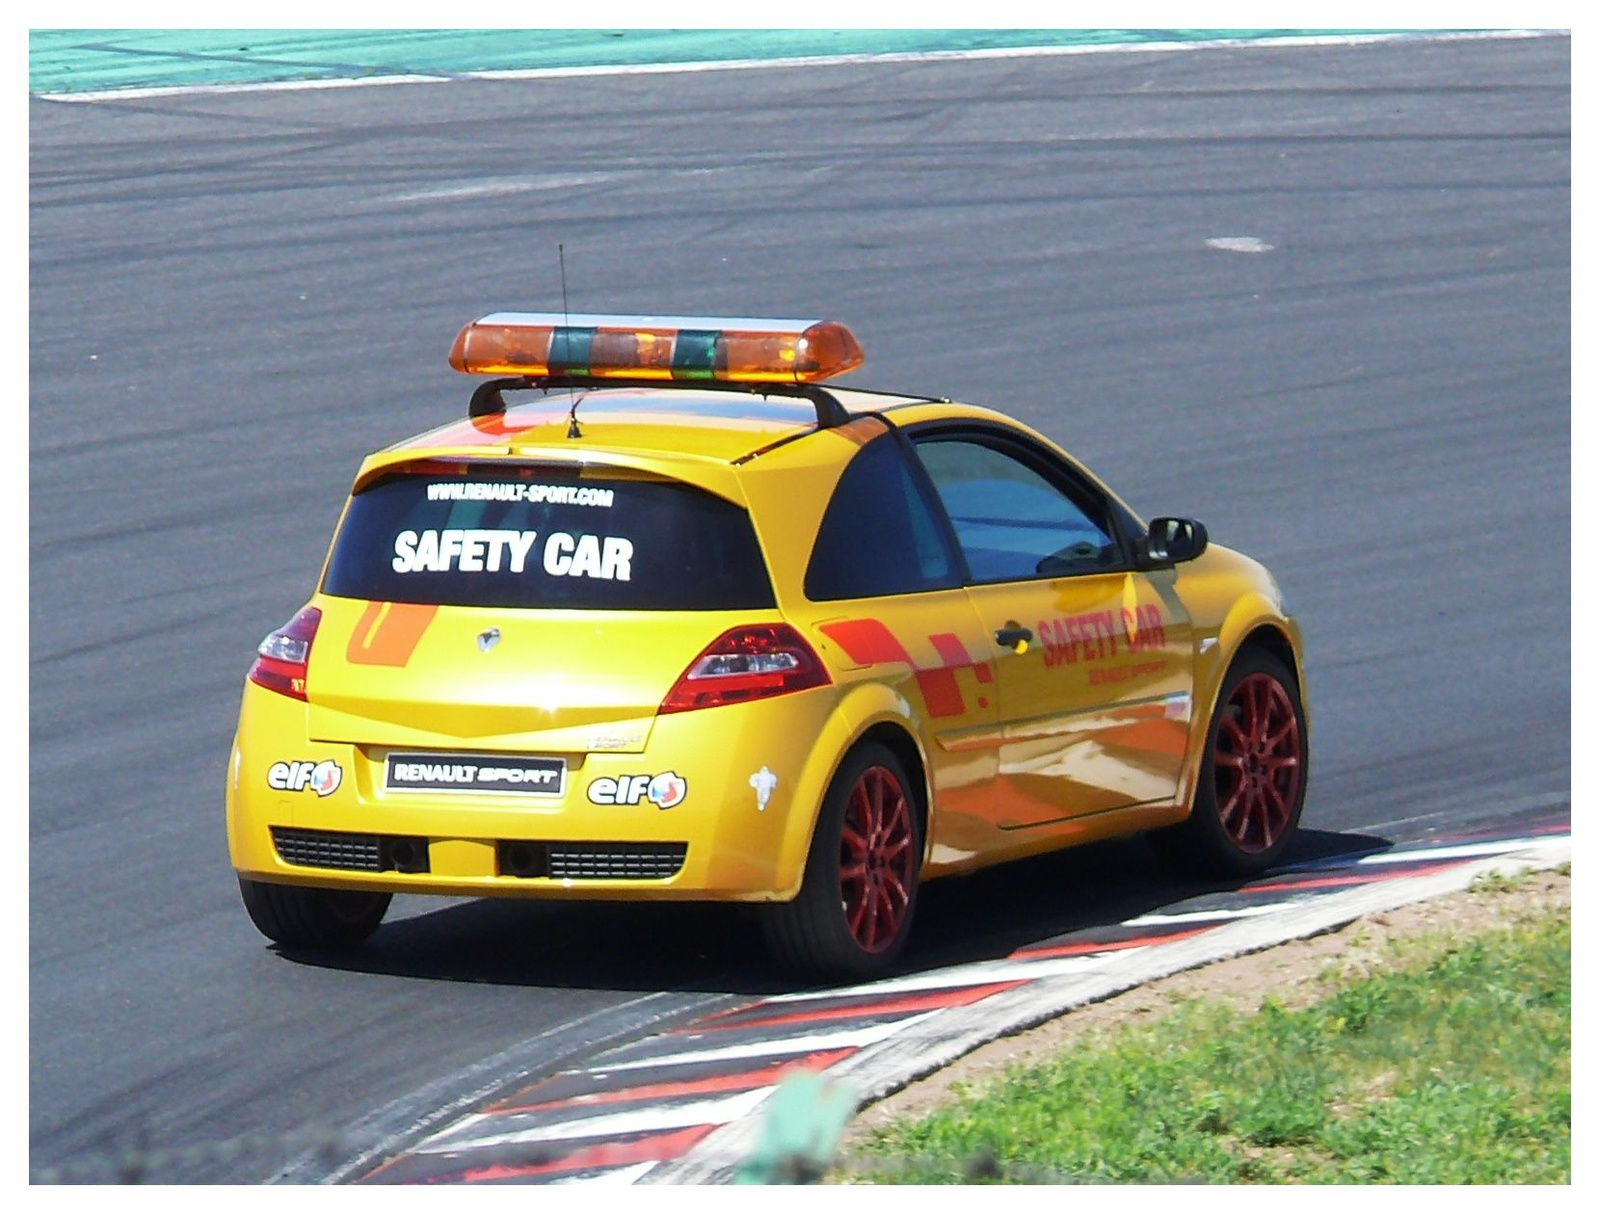 Renault Mégnae RS "Safety Car"